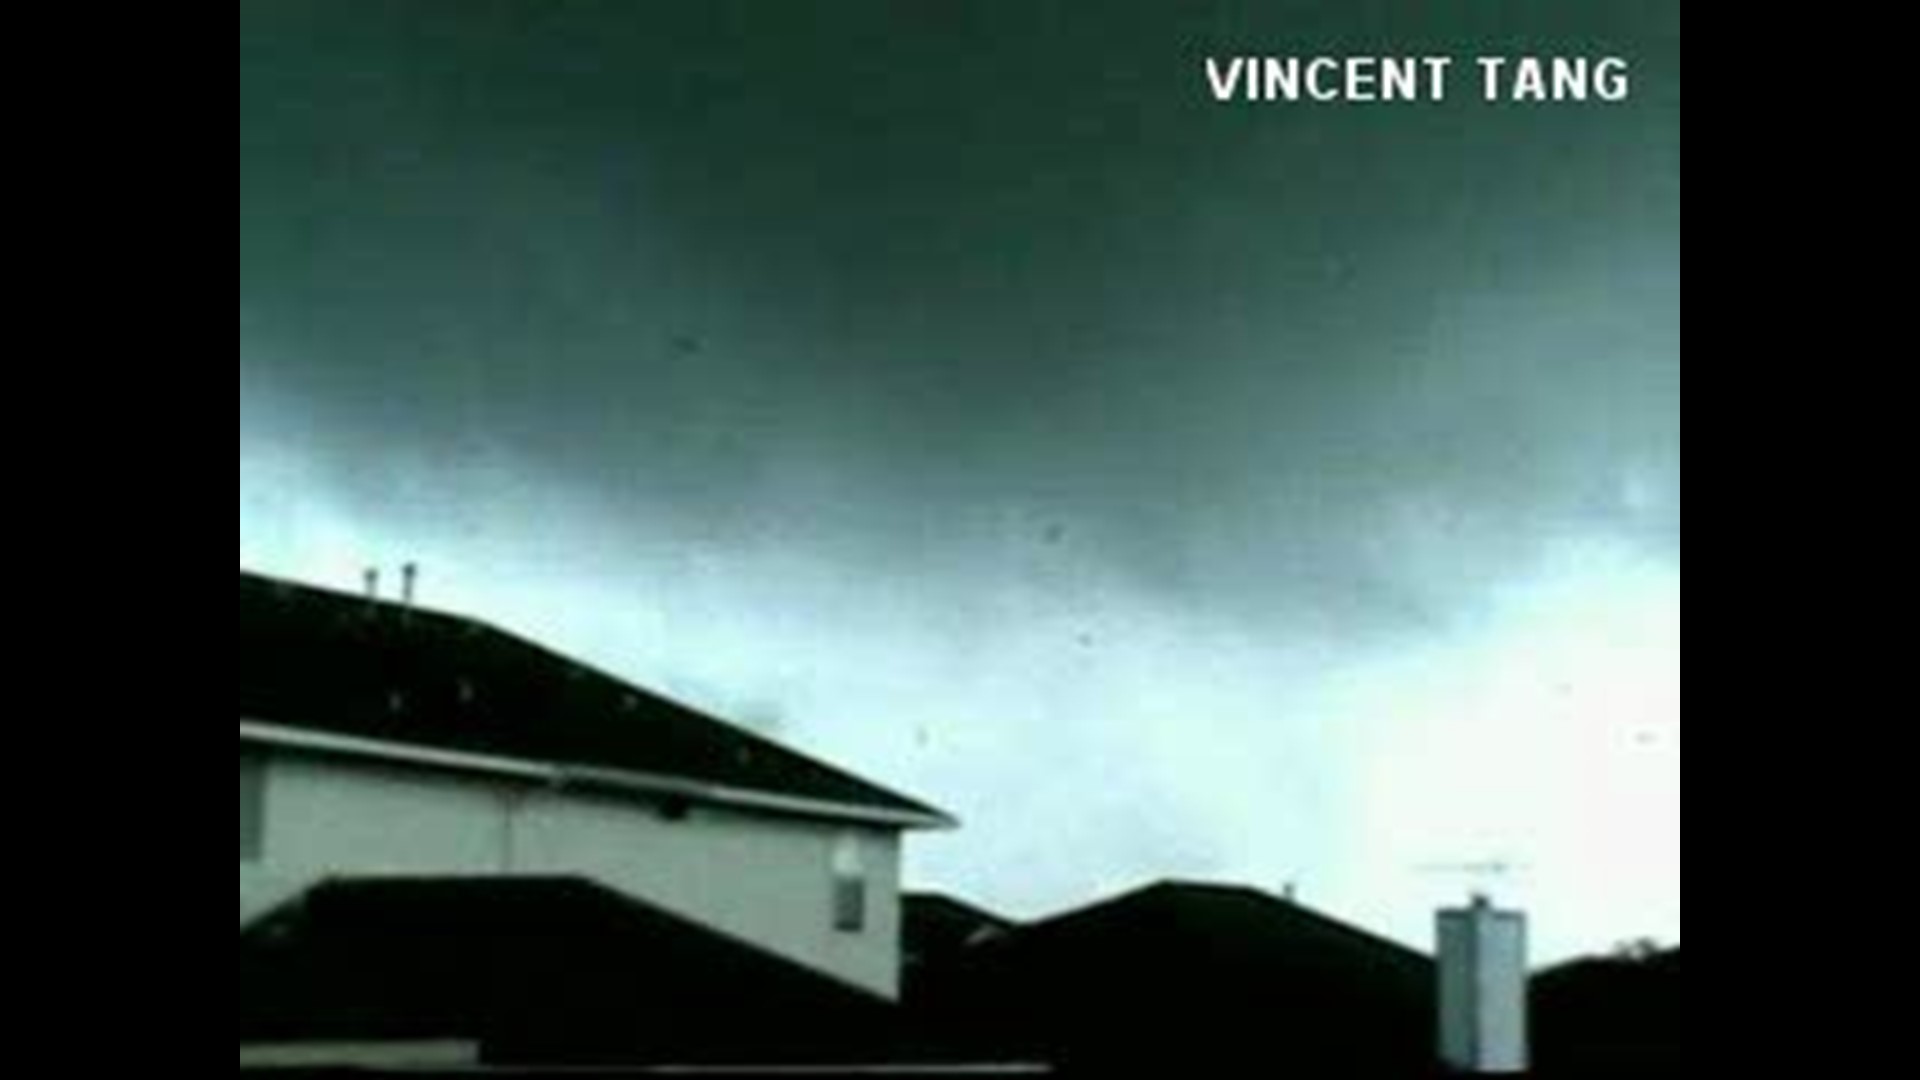 CNN VIDEO: Incredible video shows a tornado touching down in Lancaster, Texas